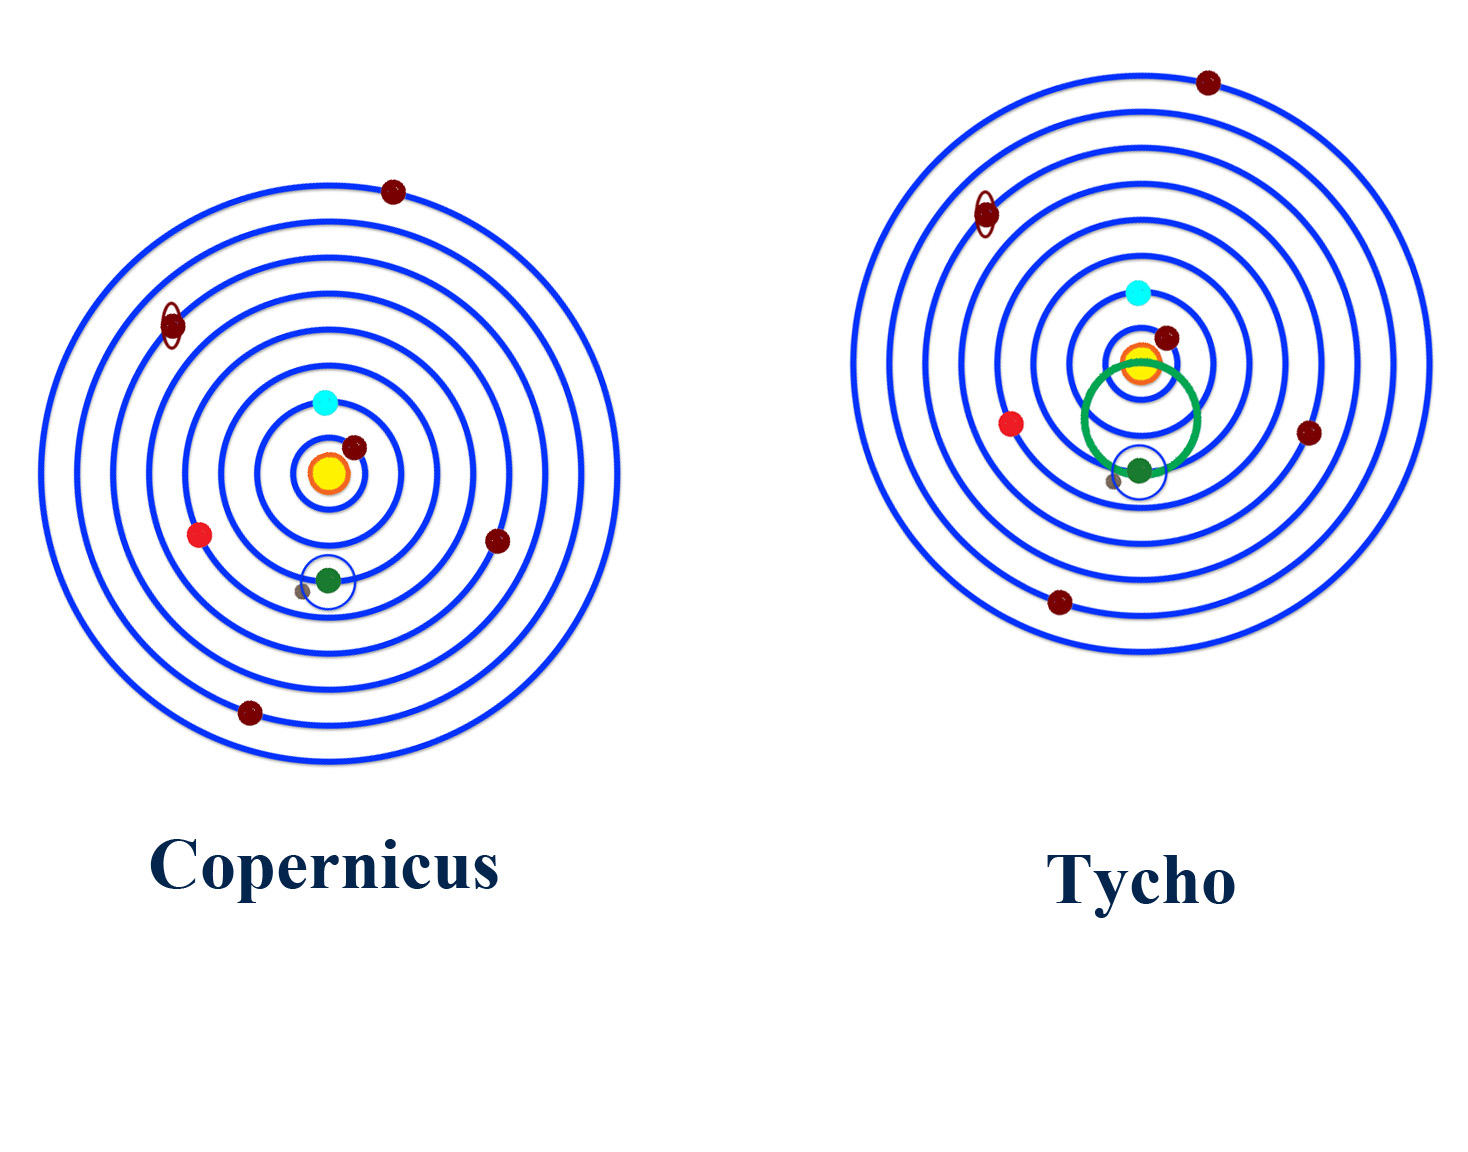 Copernicus and Tycho